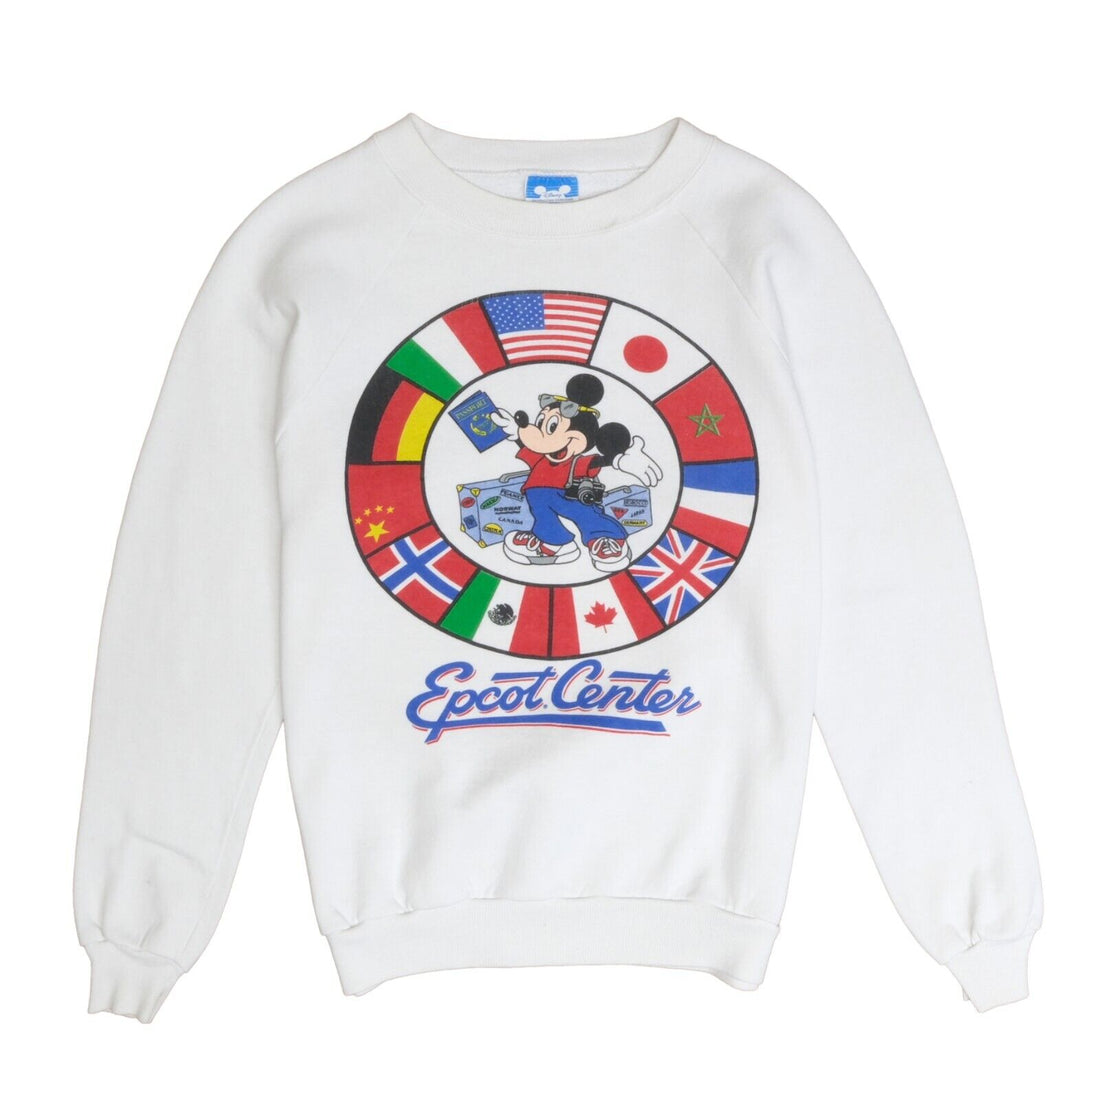 Vintage Mickey Mouse Epcot Center Sweatshirt Crewneck Size Medium Disney 80s